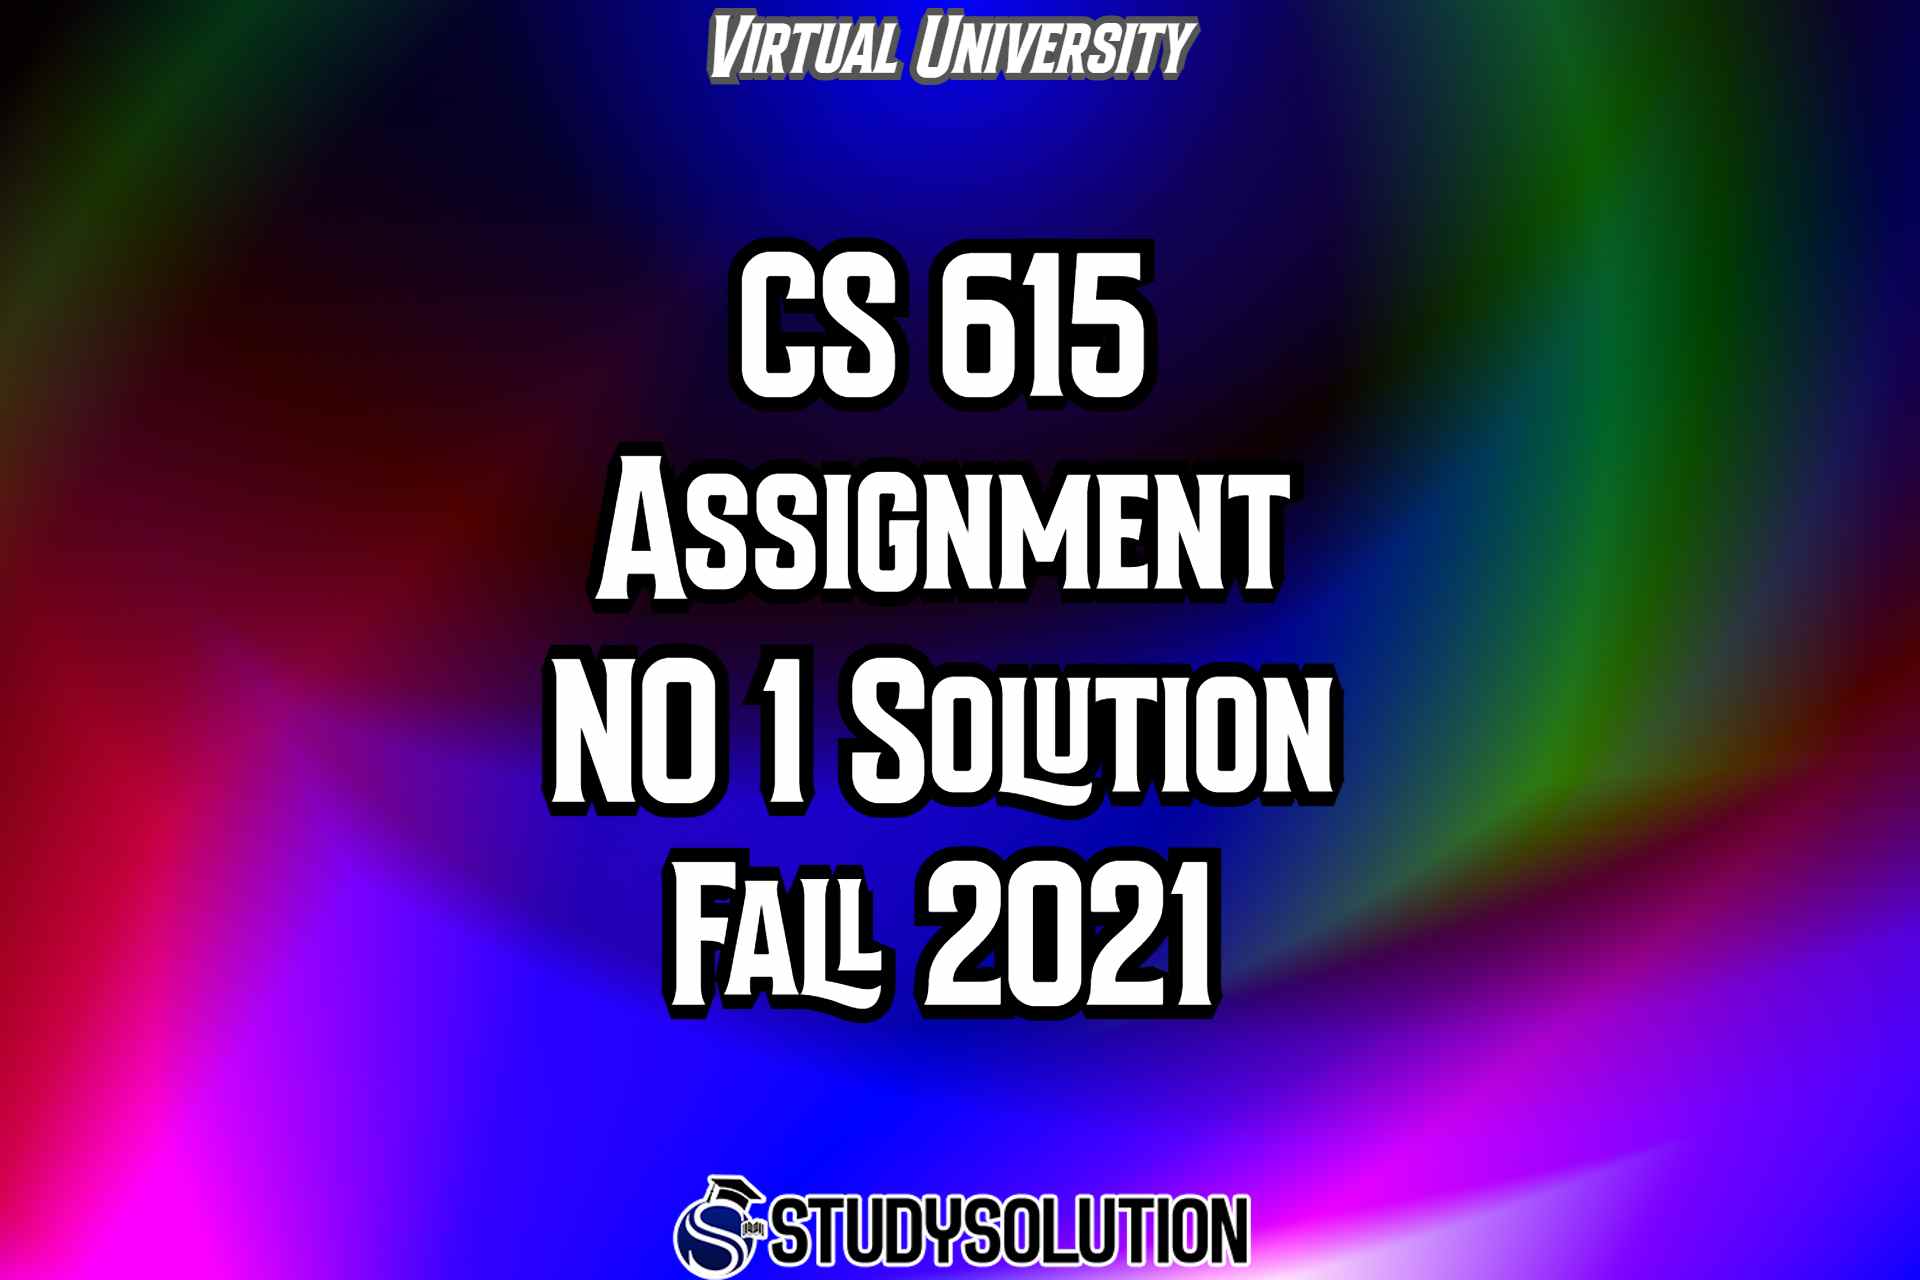 CS615 Assignment NO 1 Solution Fall 2021